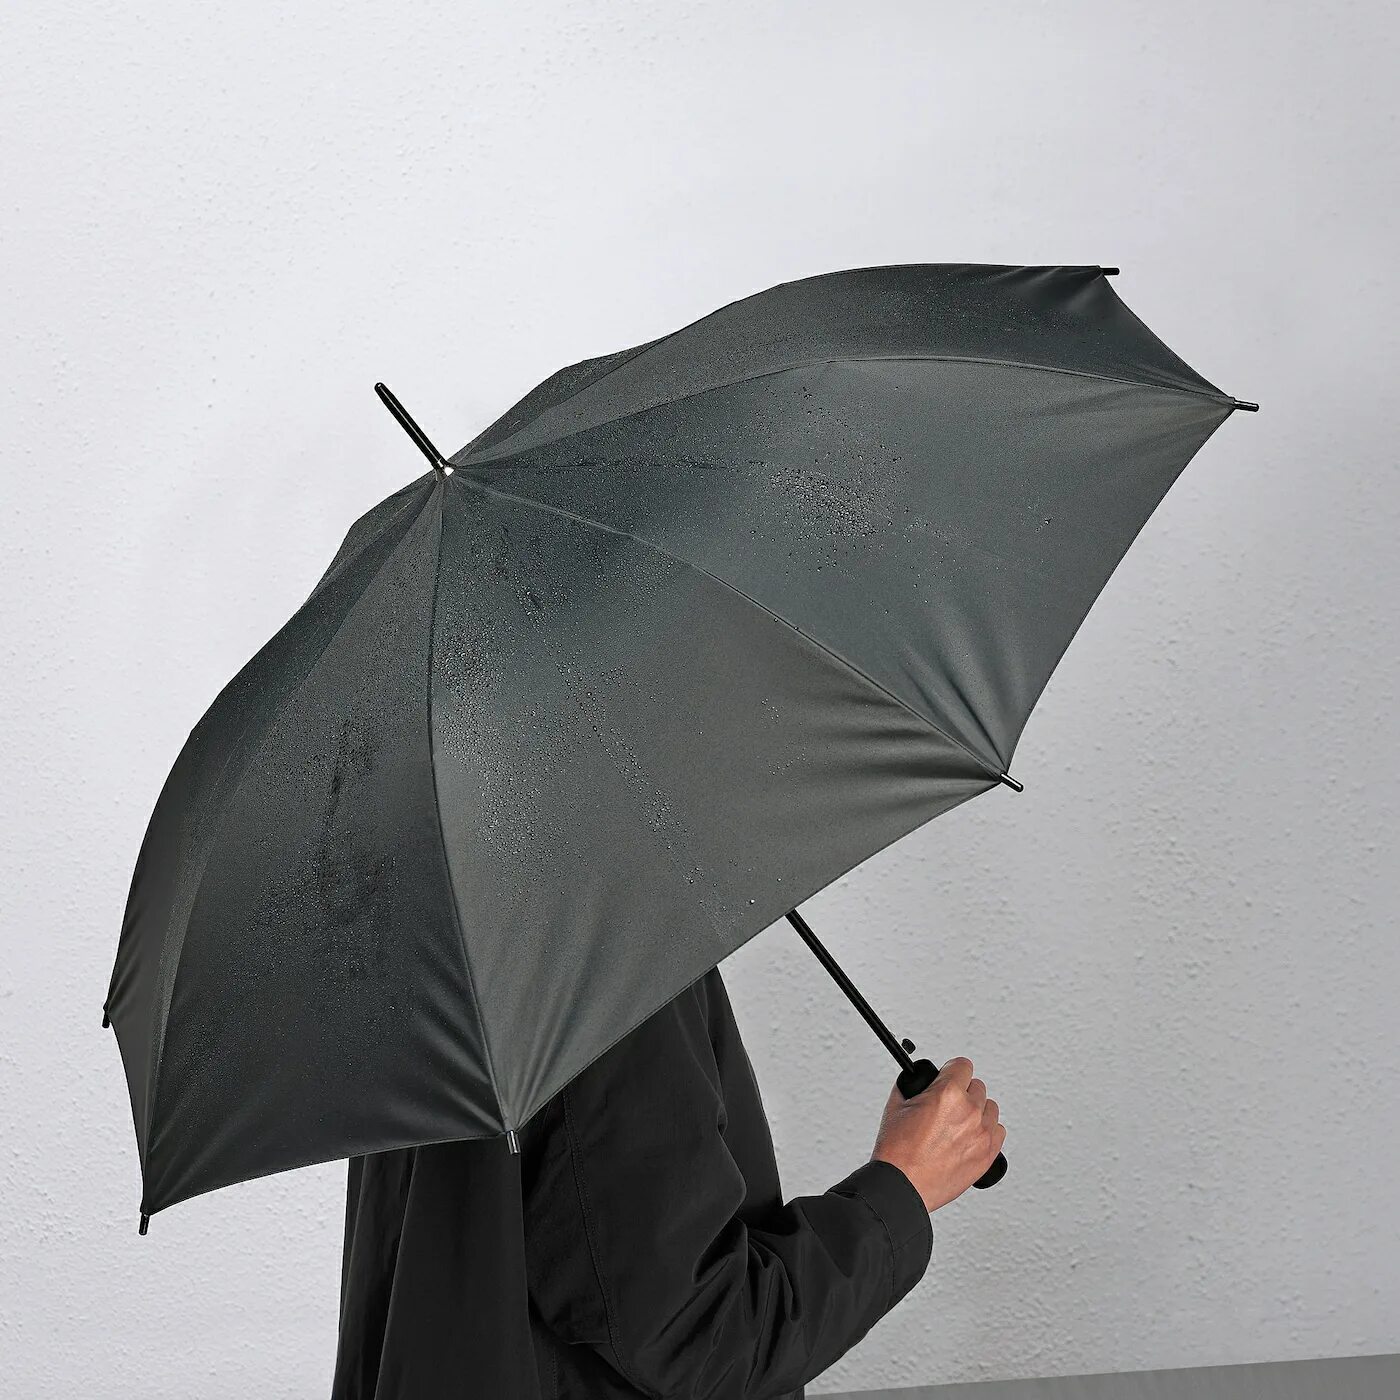 KNALLA КНЭЛЛА зонт. Ikea KNALLA зонт. Зонт KNALLA КНЭЛЛА икеа. KNALLA КНЭЛЛА зонт, черный. You take an umbrella today